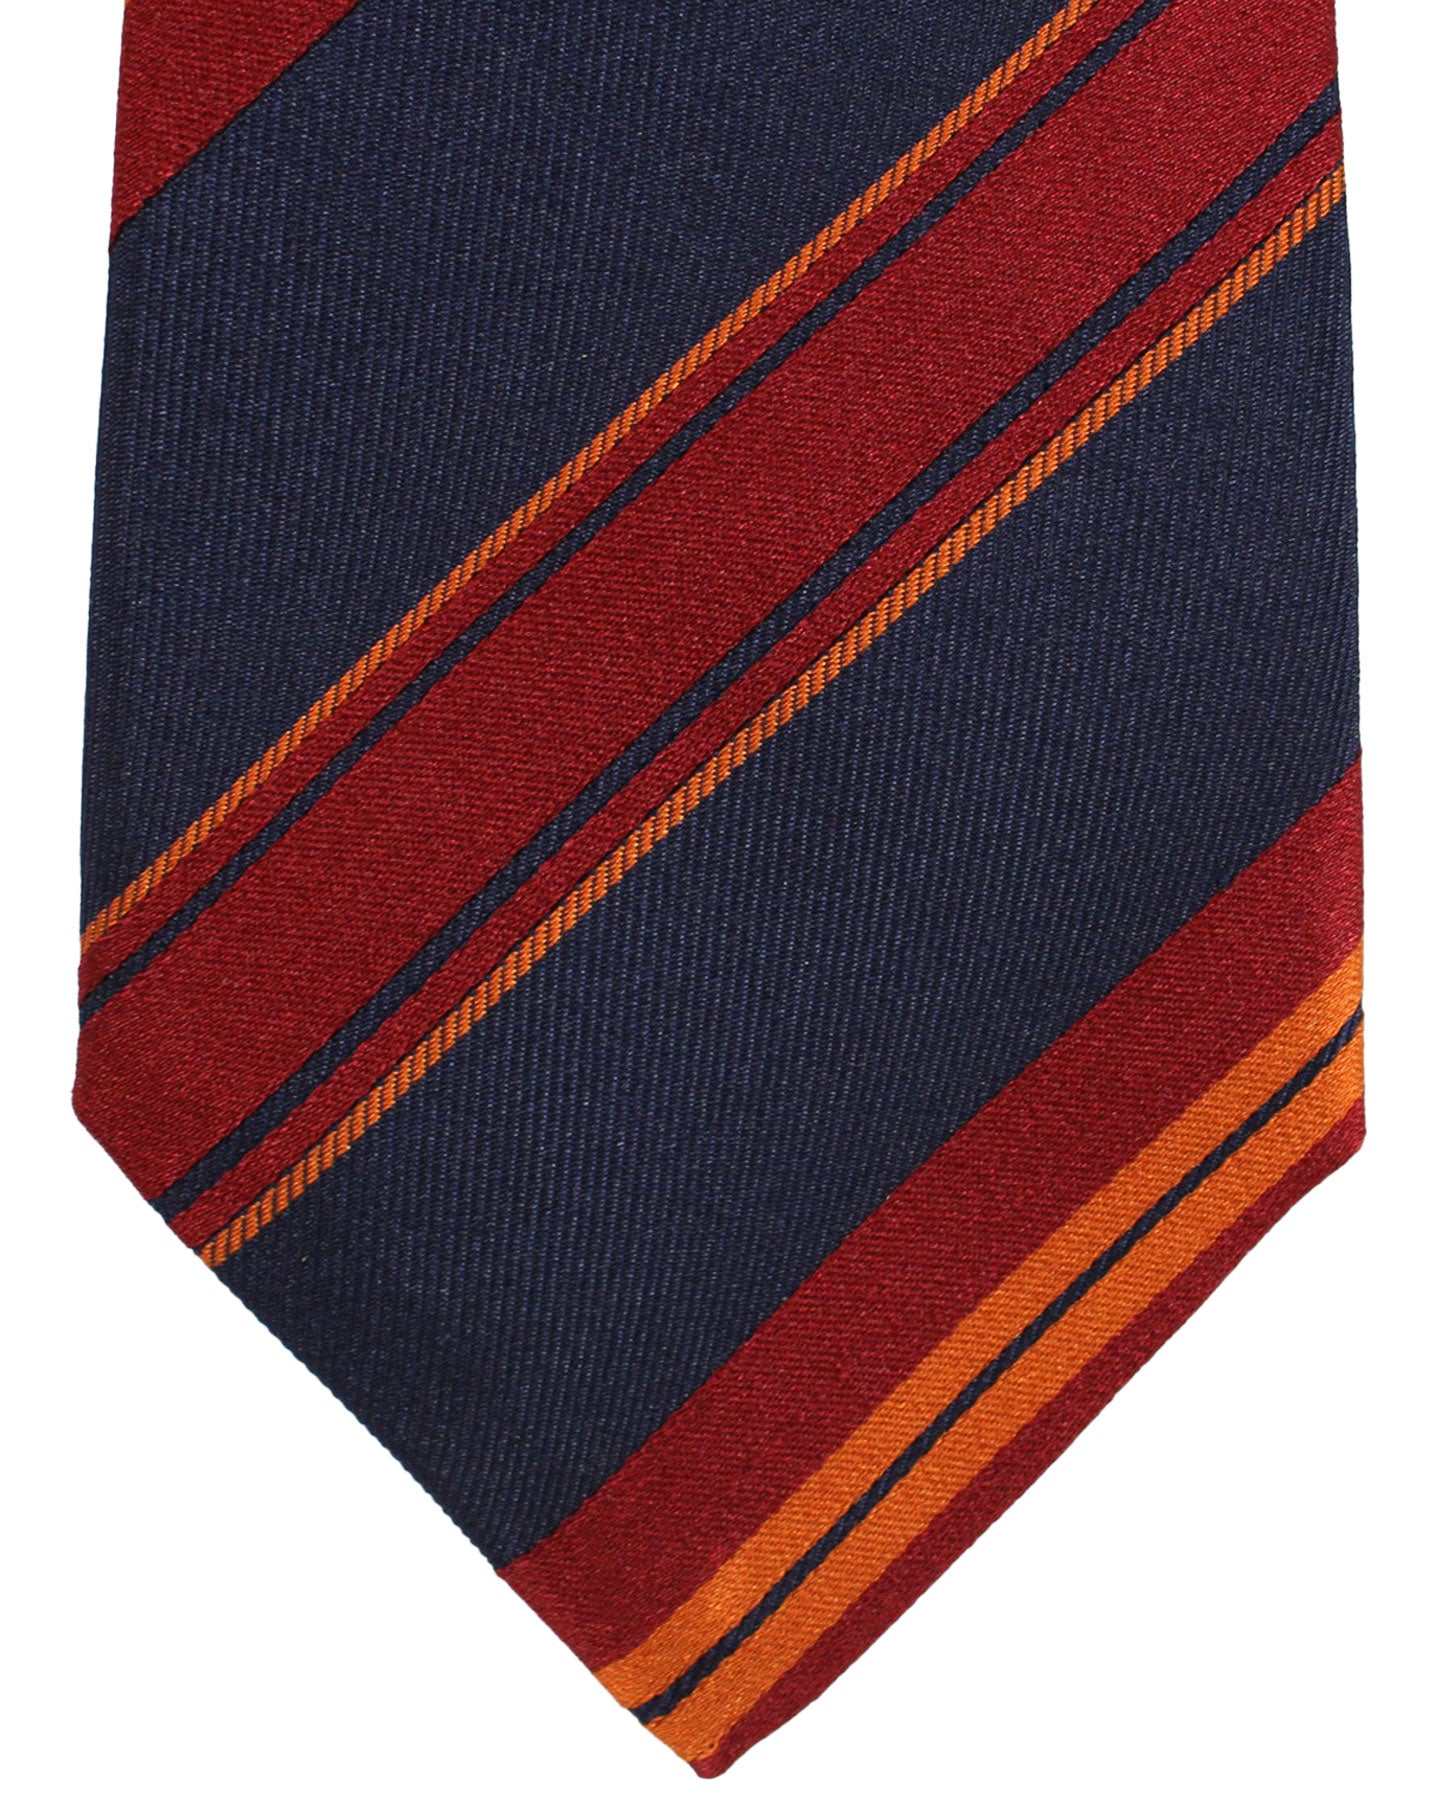 Kiton Sevenfold Tie Dark Navy Orange Maroon Stripes